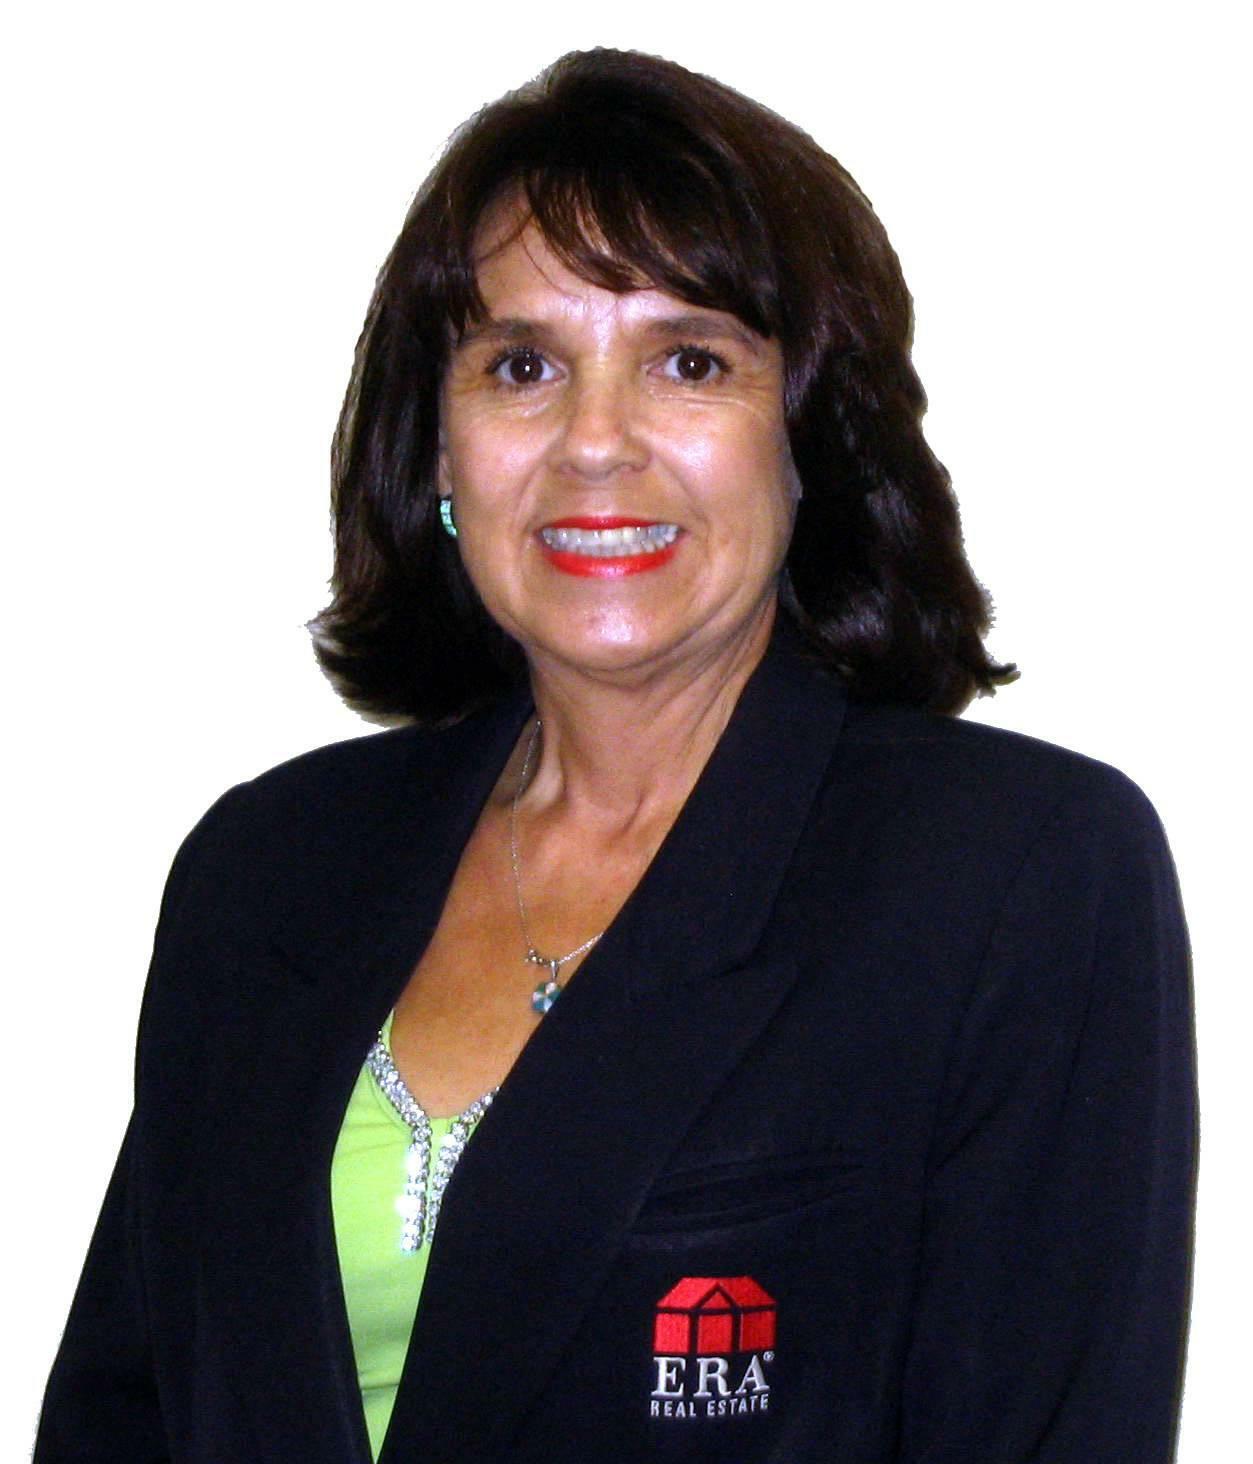 Kathie Jordan, Real Estate Salesperson in Anniston, ERA King Real Estate Company, Inc.